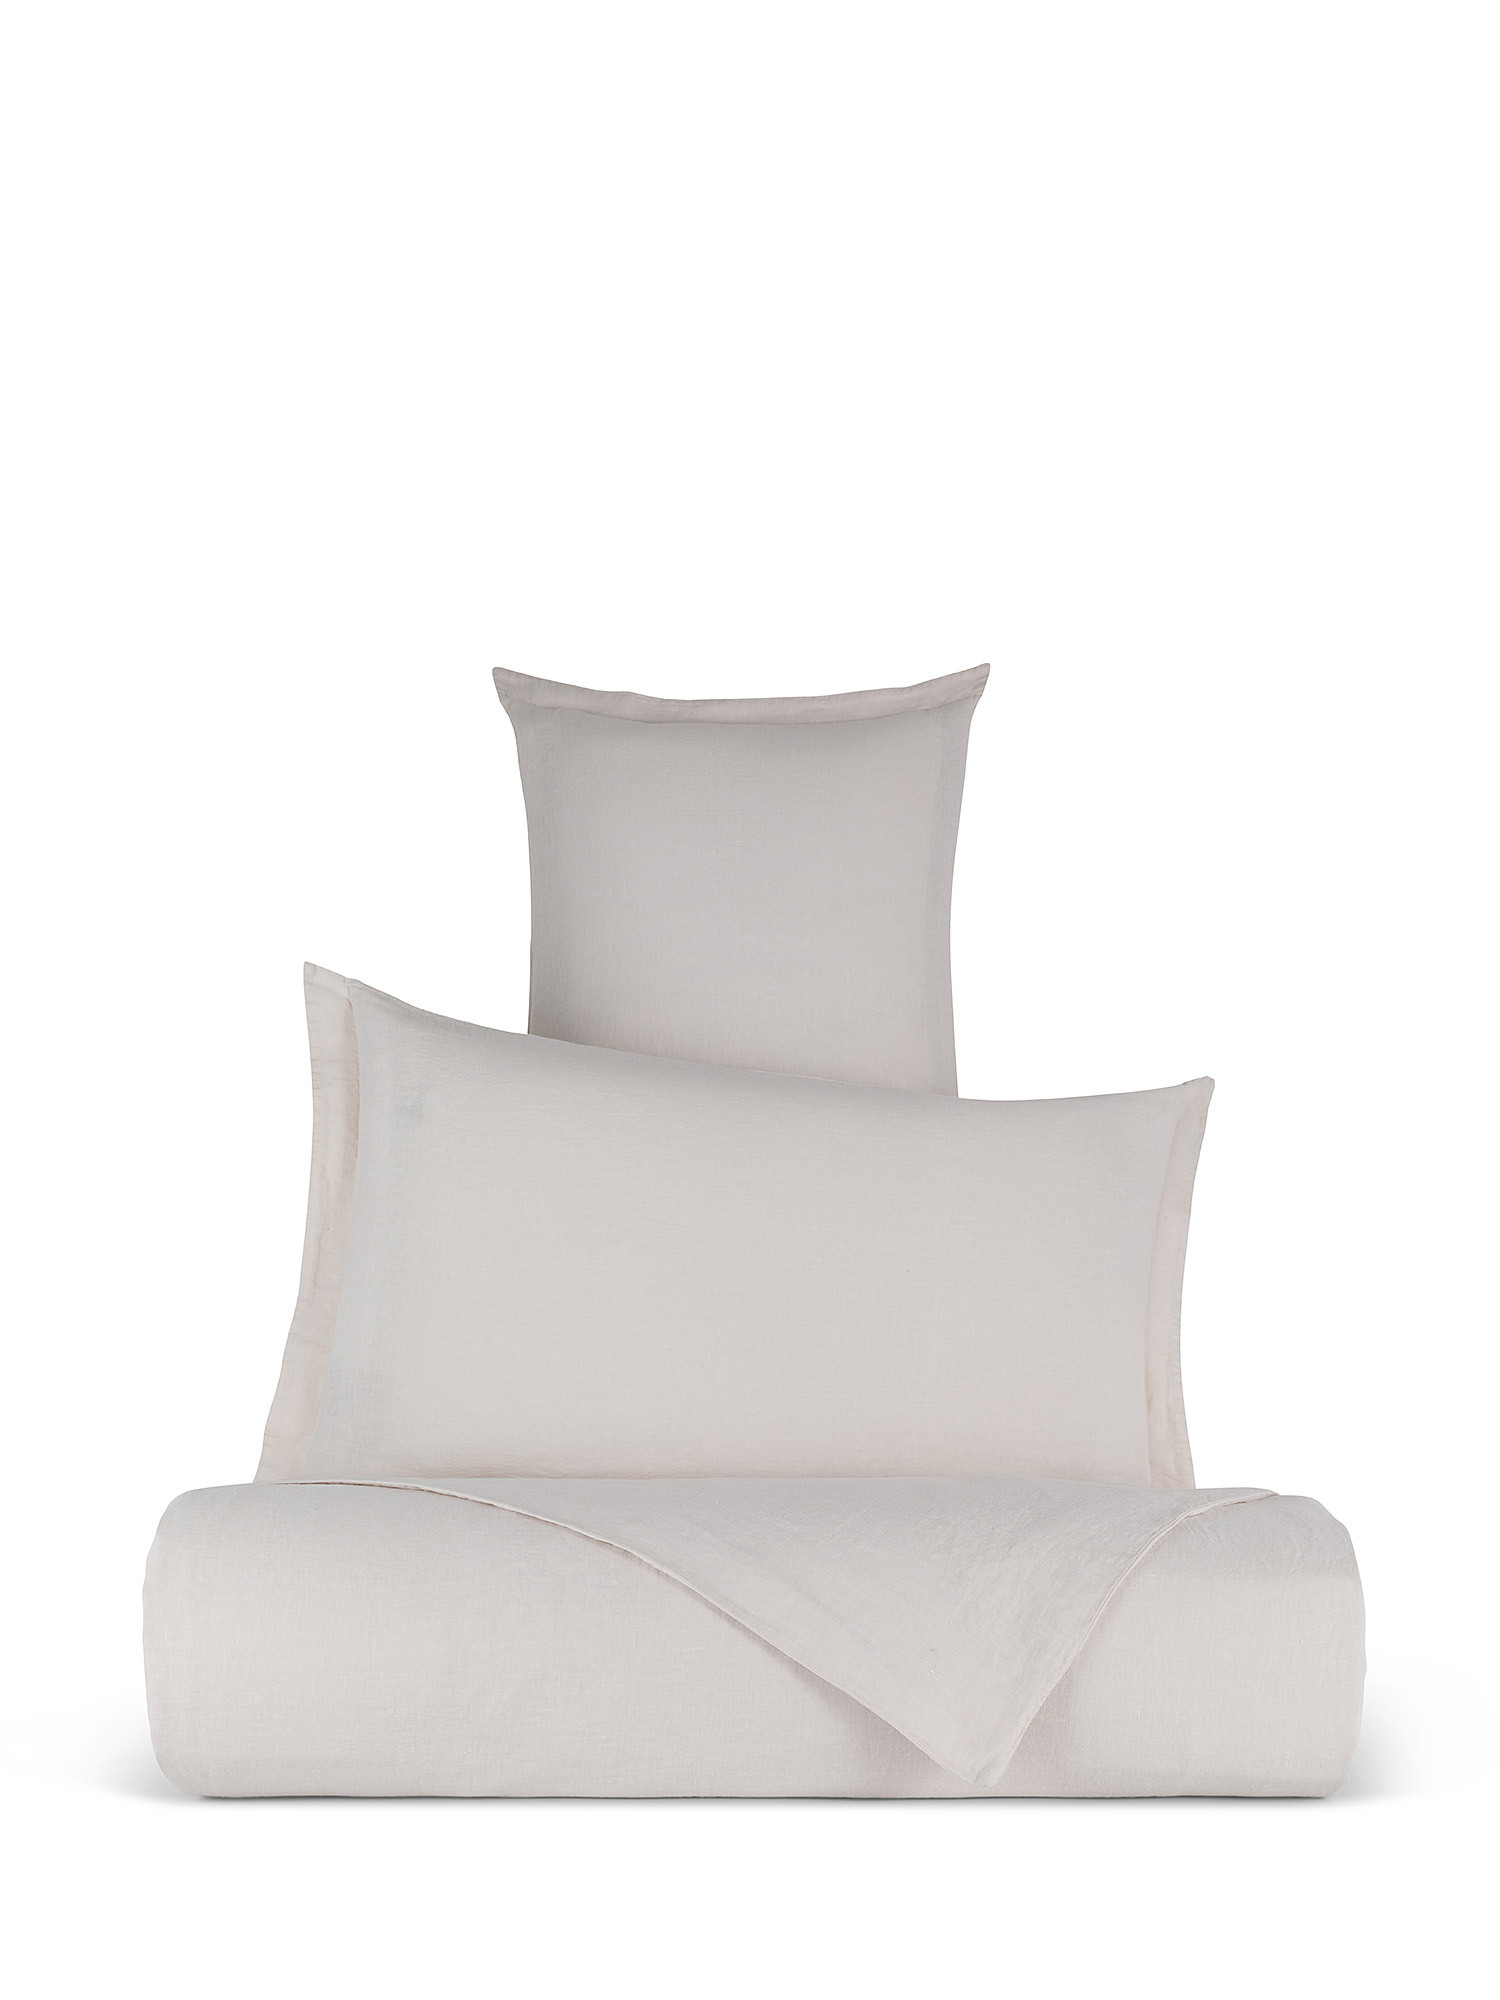 Zefiro plain color linen and cotton pillowcase, Light Beige, large image number 2